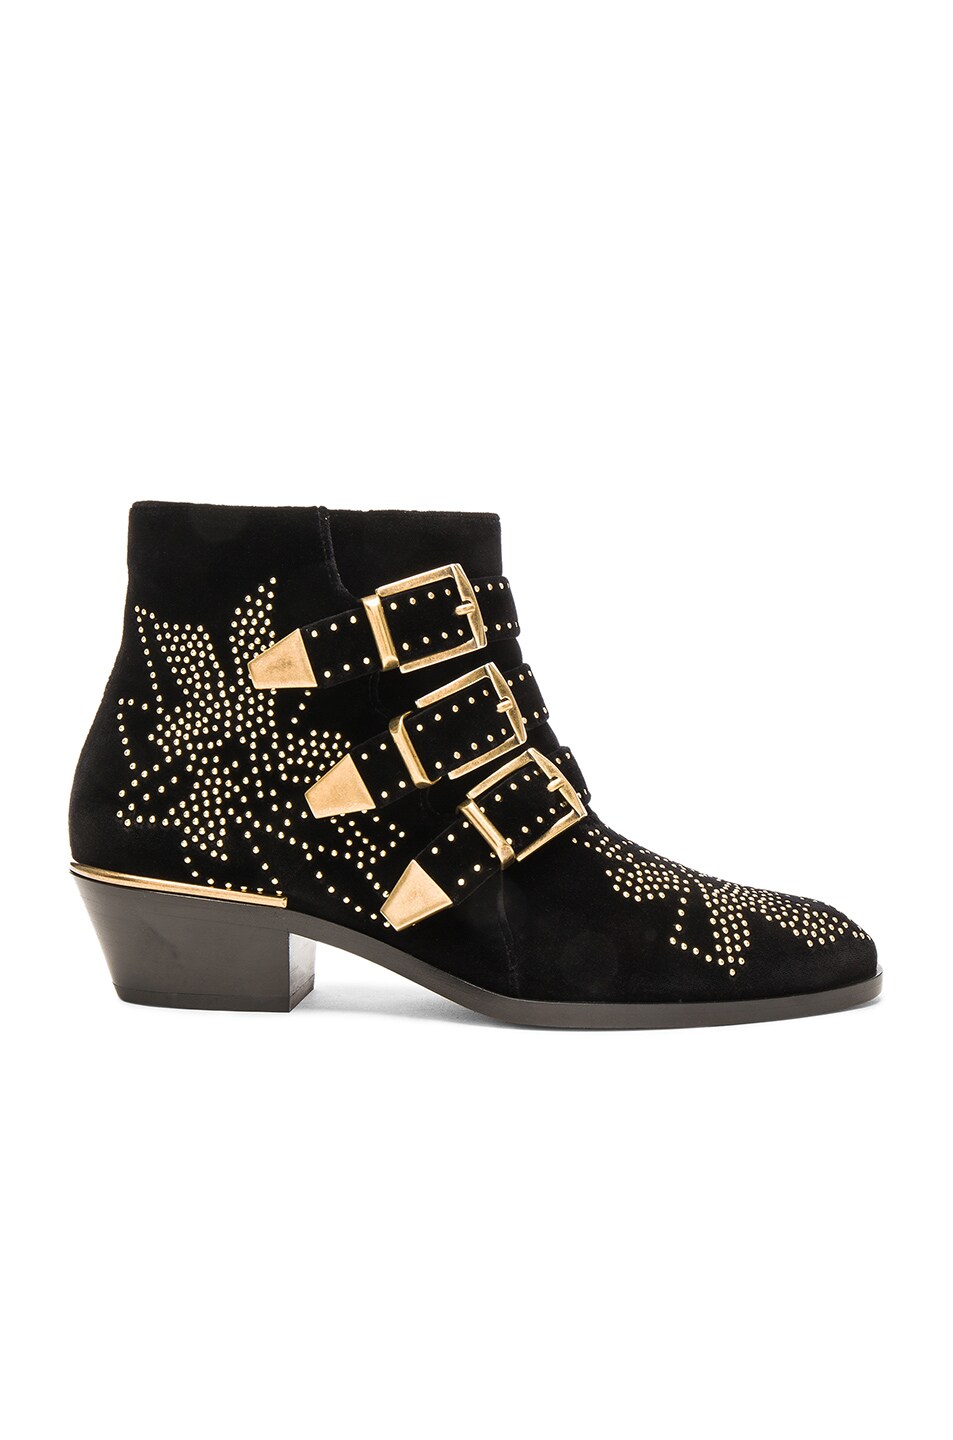 2 Stores In Stock: CHLOÉ Susanna Velvet Ankle Boots, Colour: Black ...